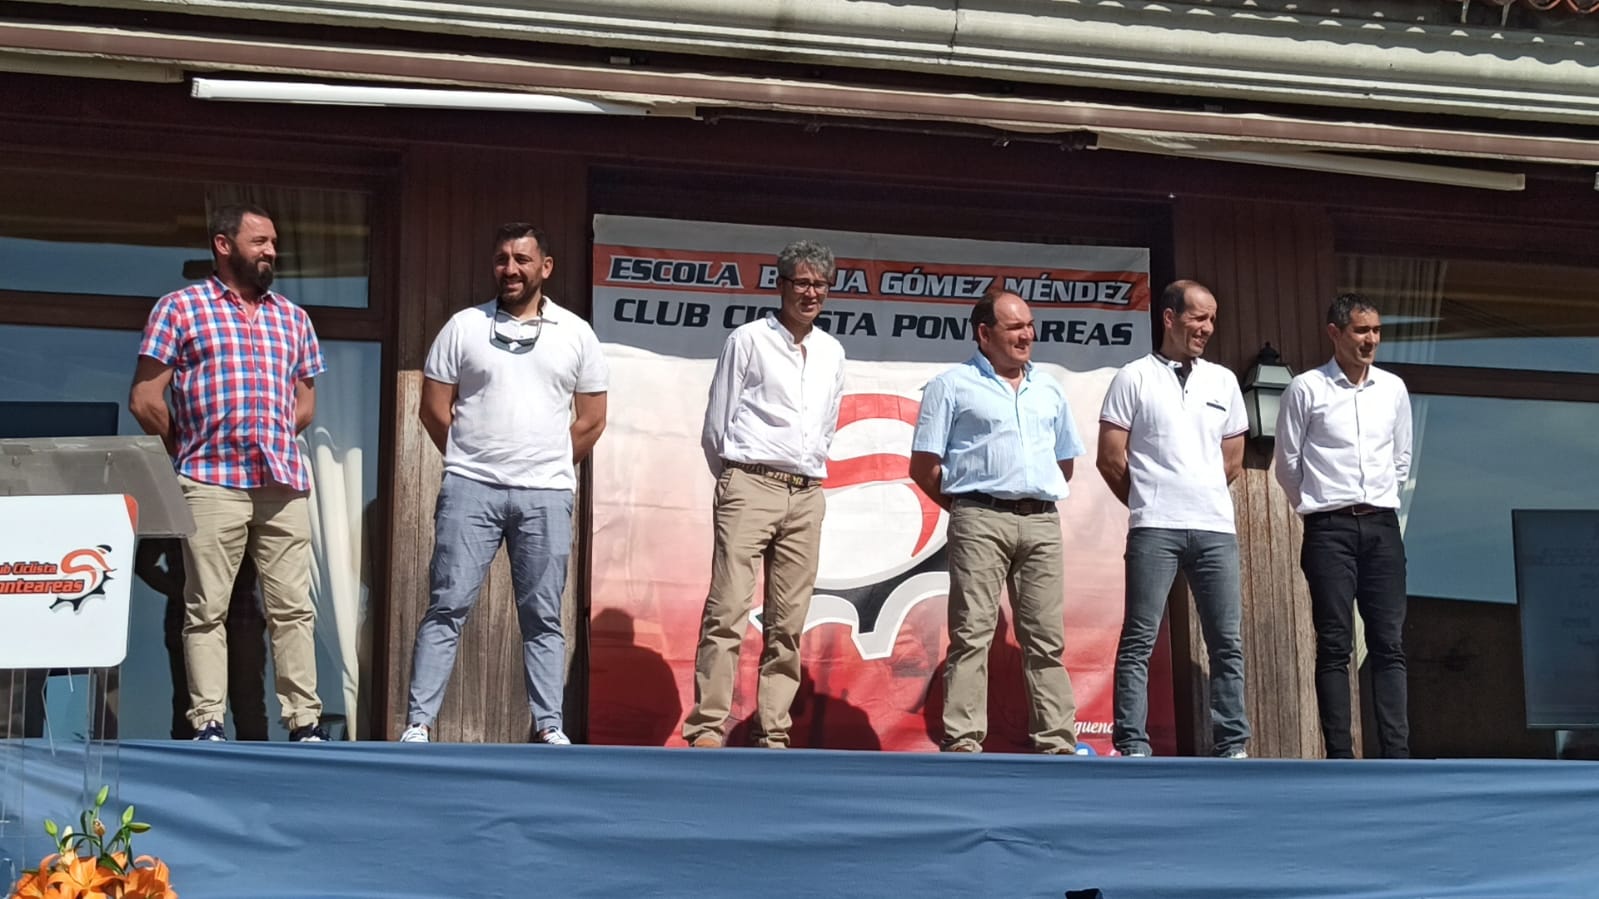 Presentación do Club Ciclista Ponteareas-Escola Borja Gómez Méndez